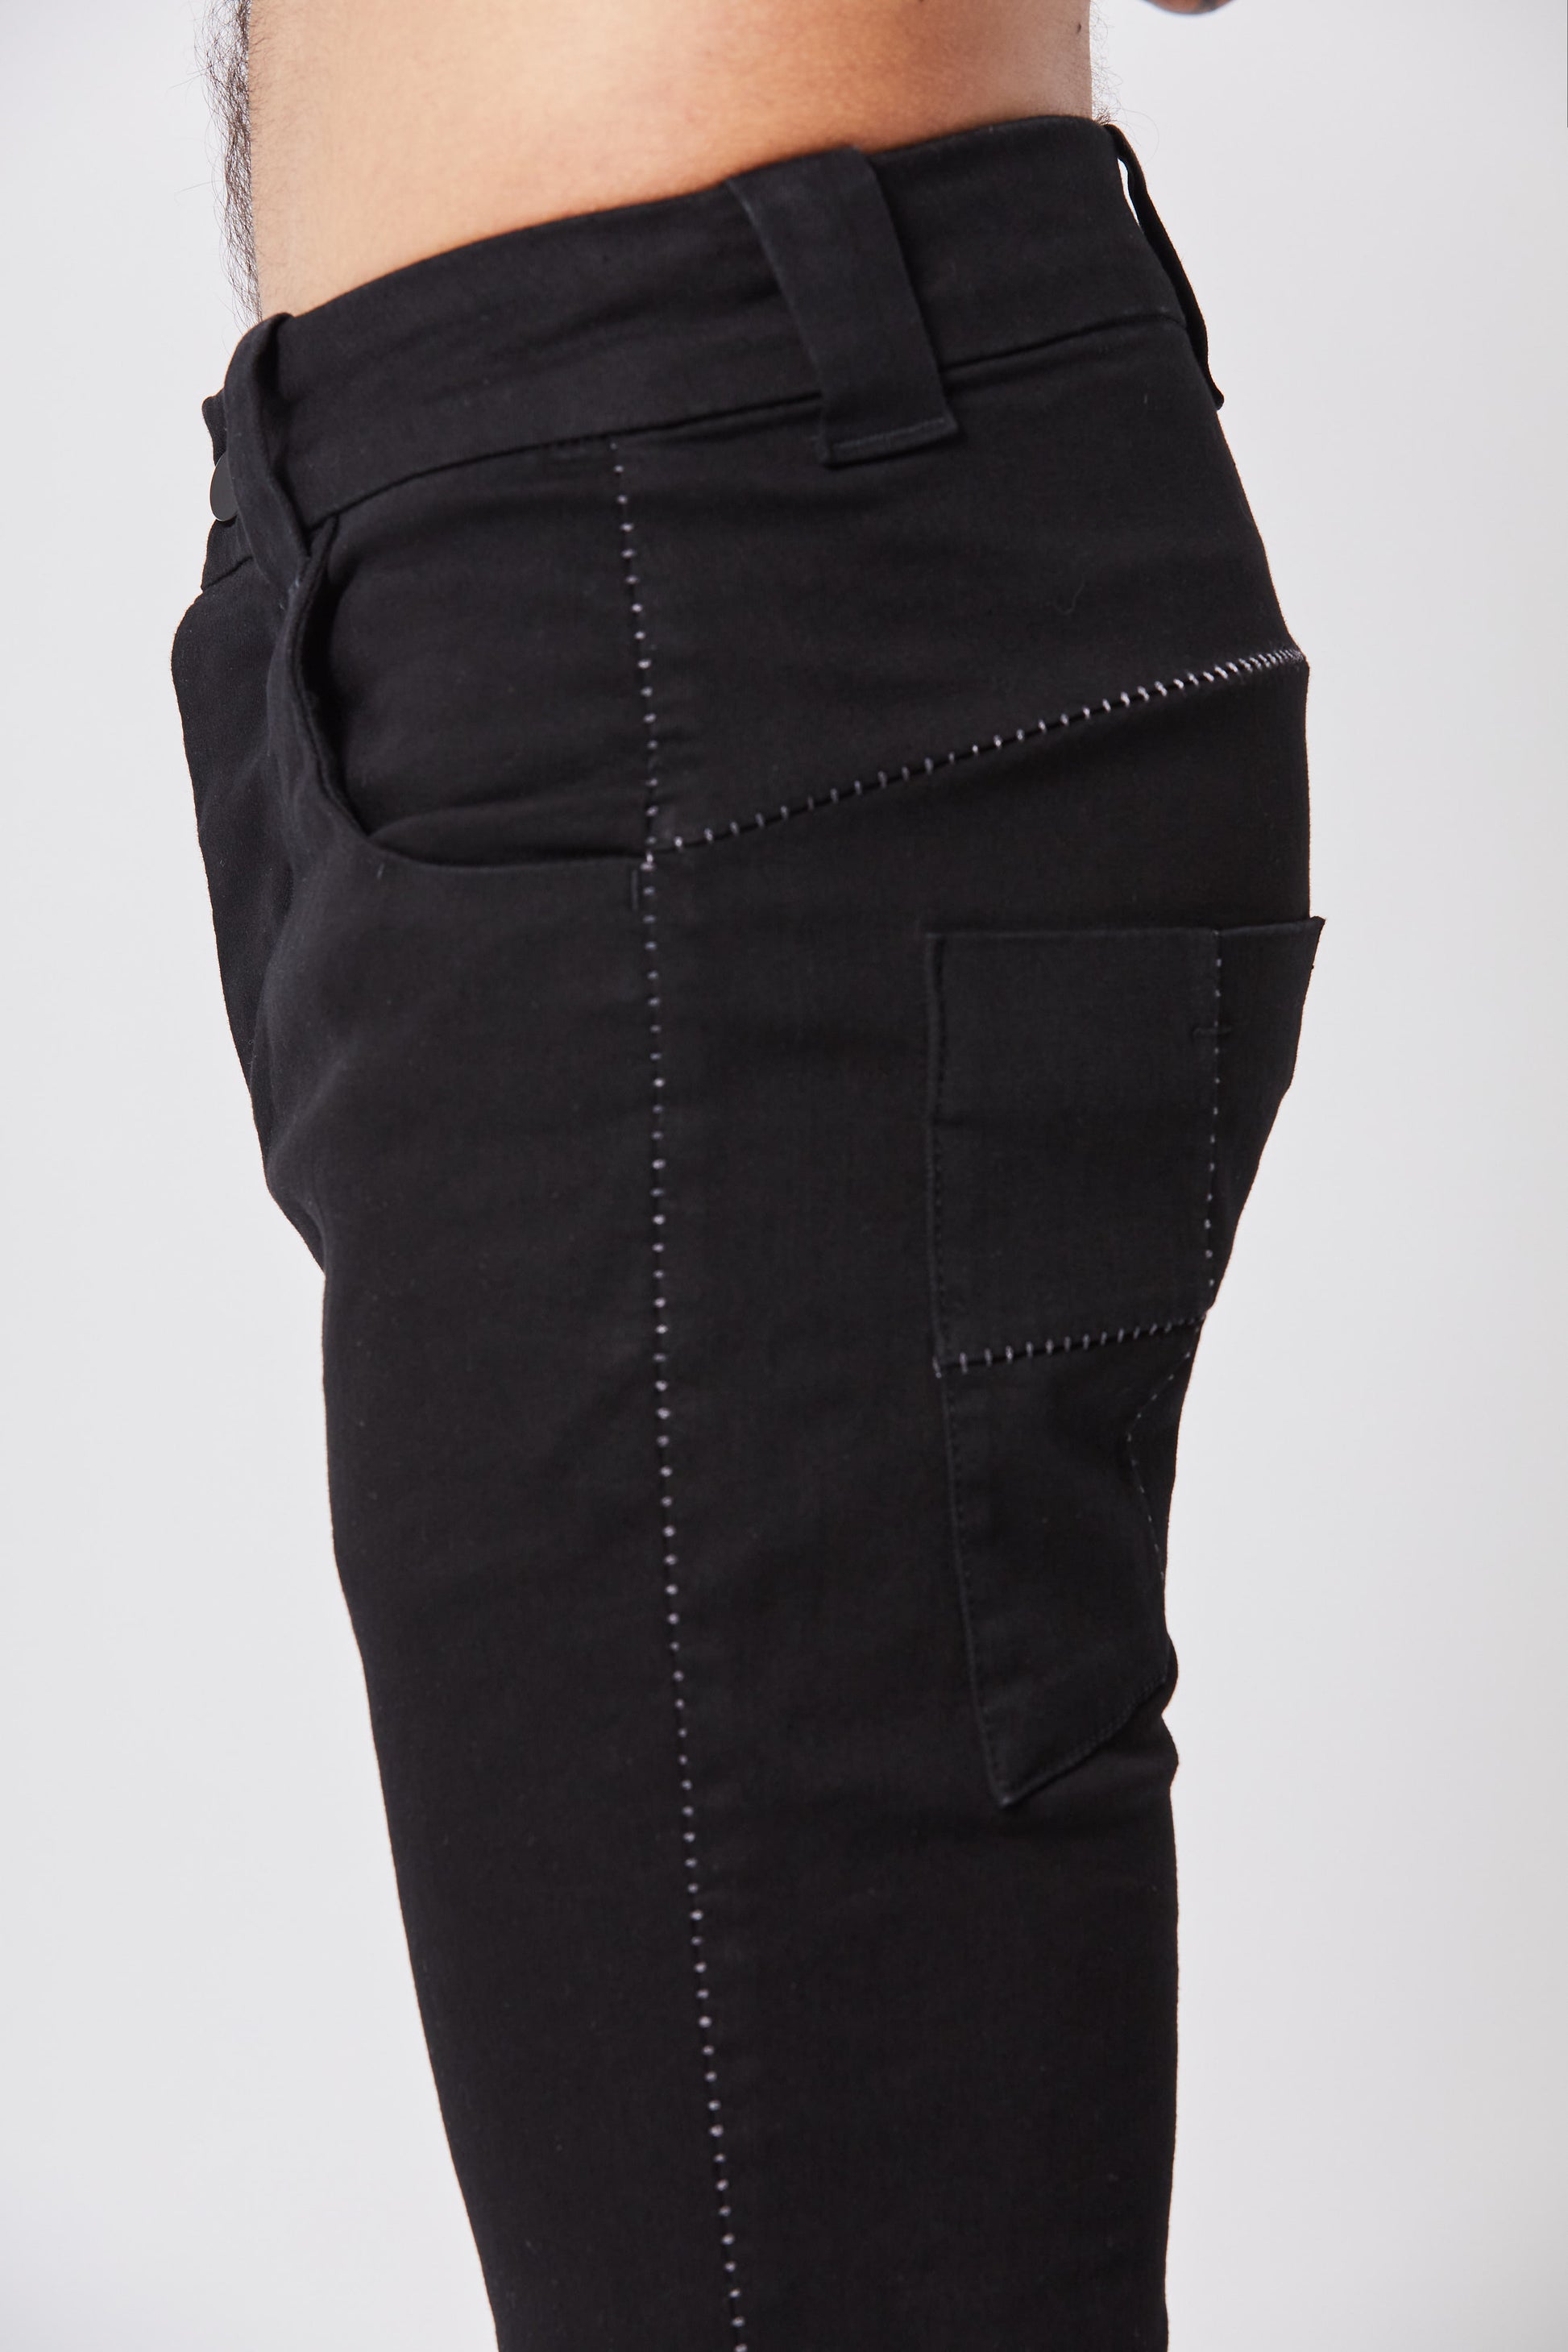 – Denim Archive Fit 79 MT The Black Jeans Slim Stretch